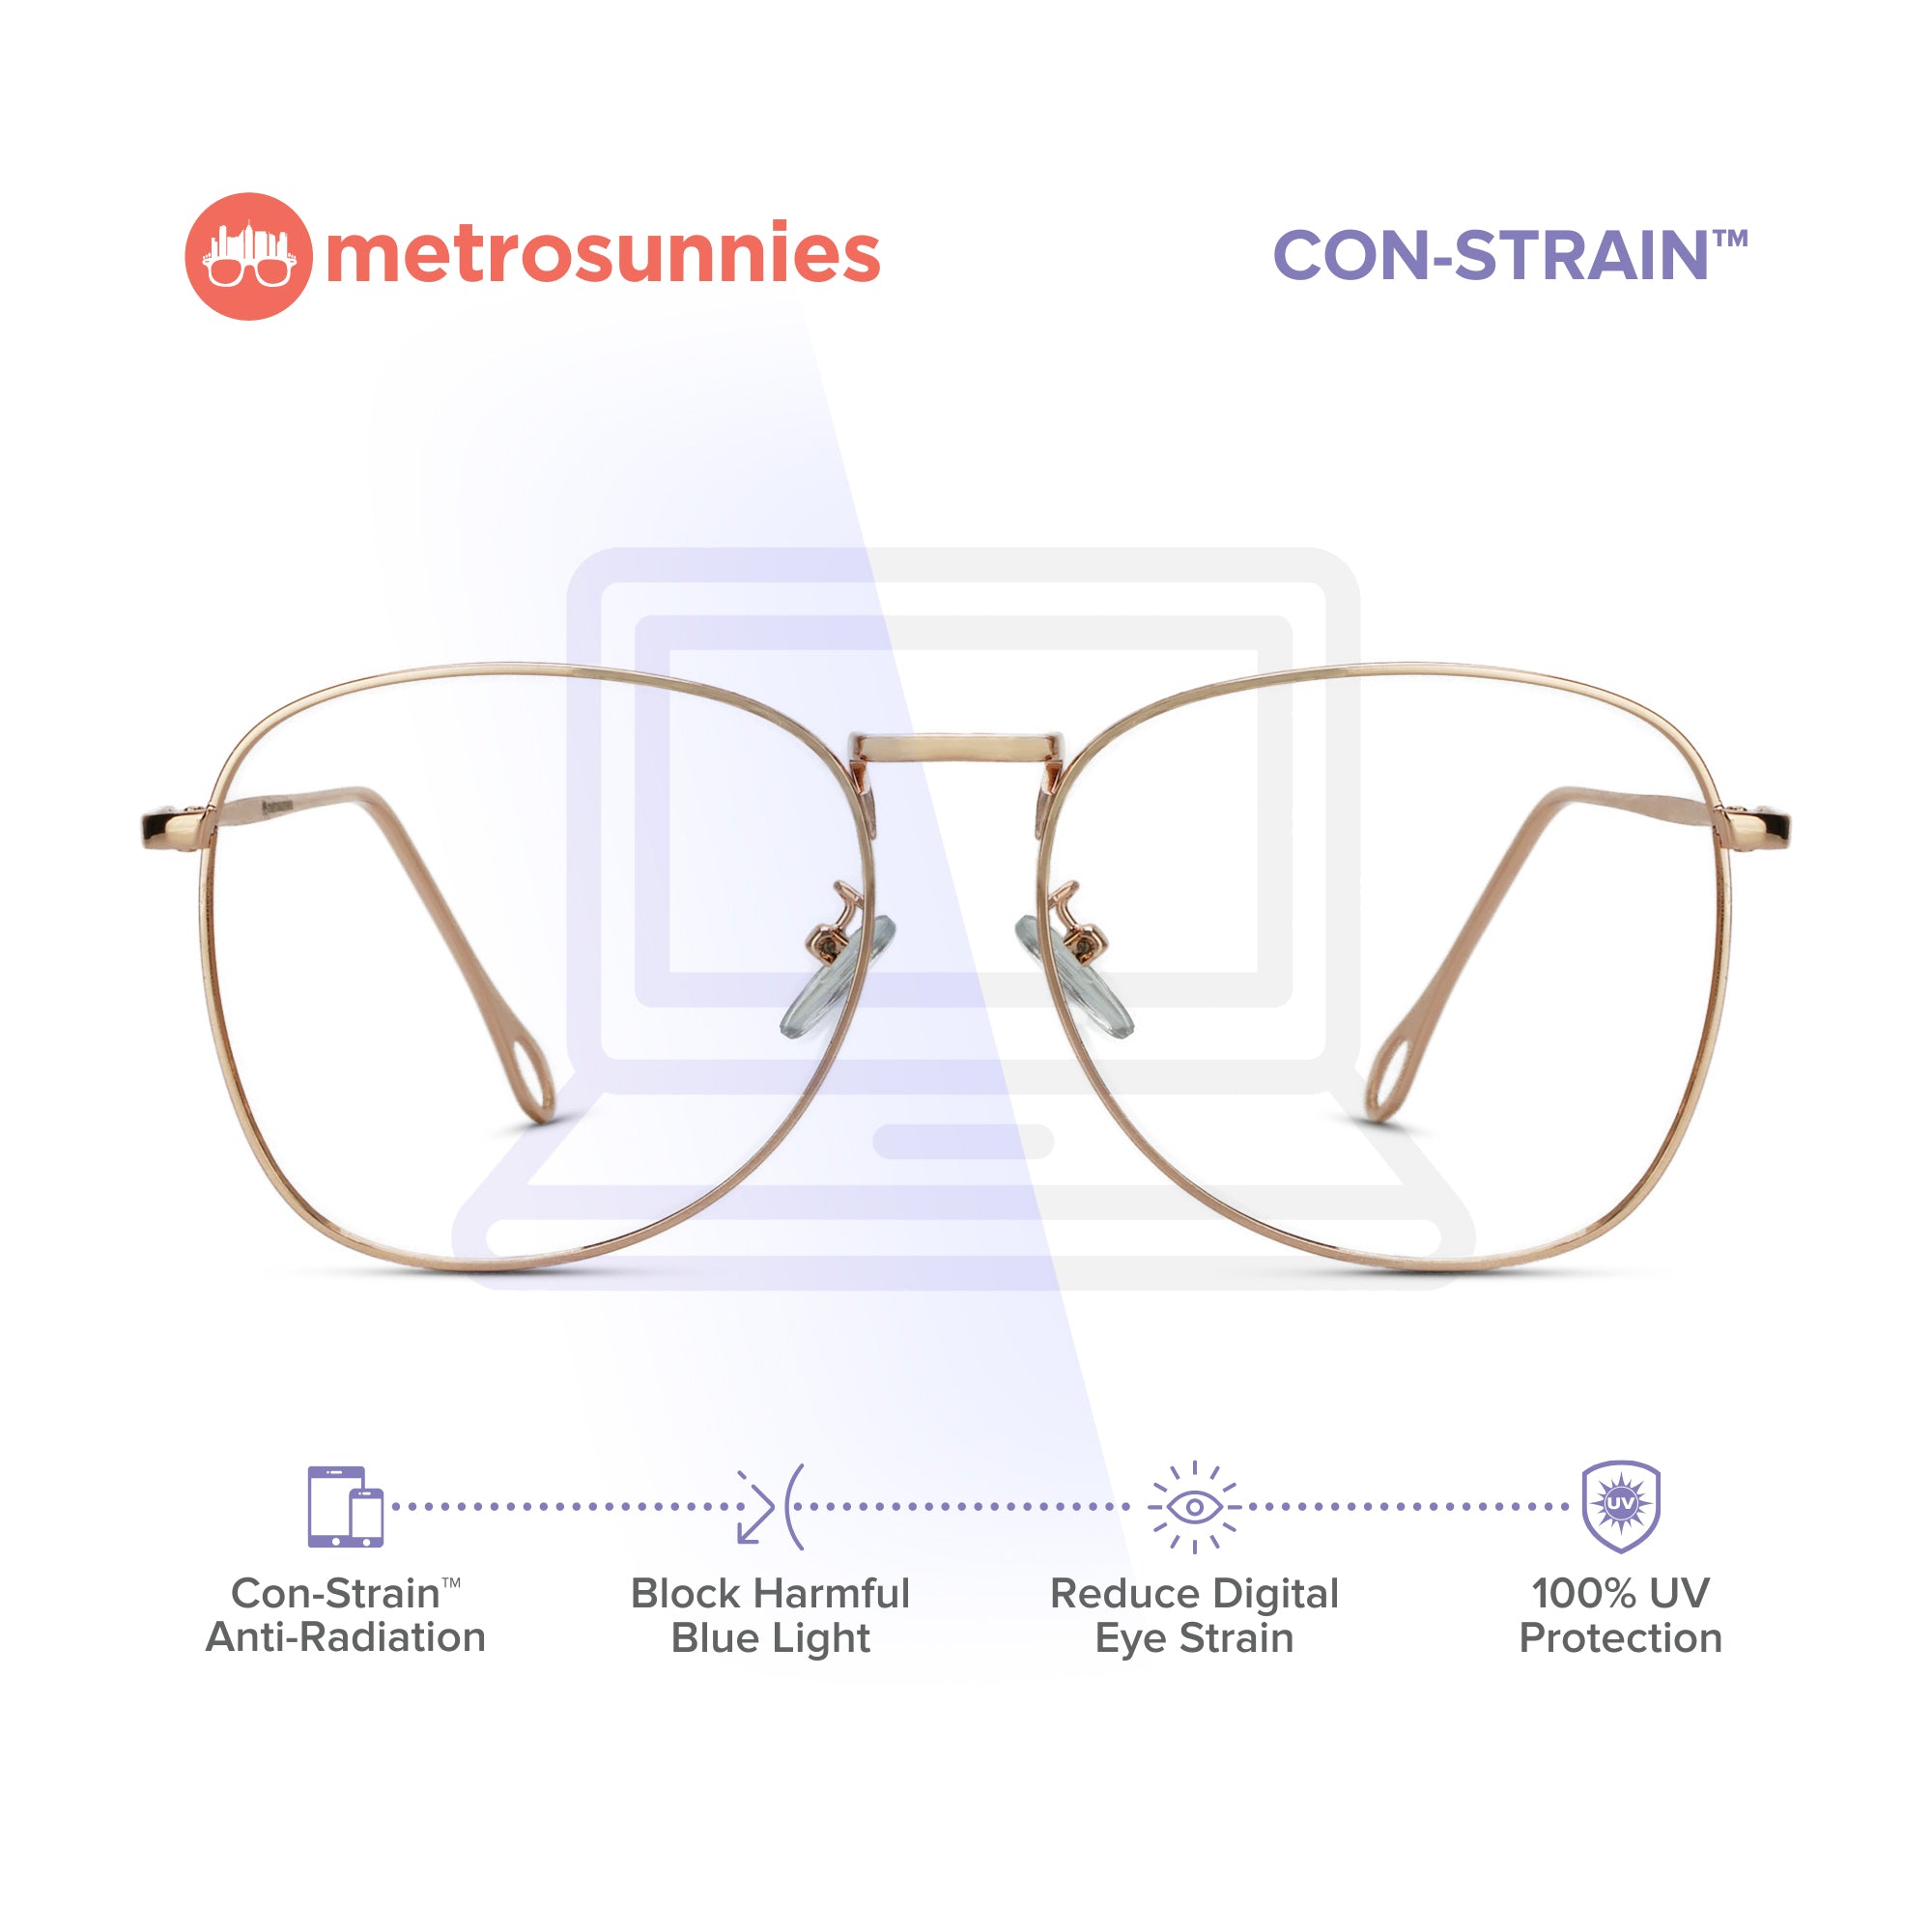 MetroSunnies Liege Specs (Rose Gold) / Con-Strain Blue Light / Anti-Radiation Computer Eyeglasses